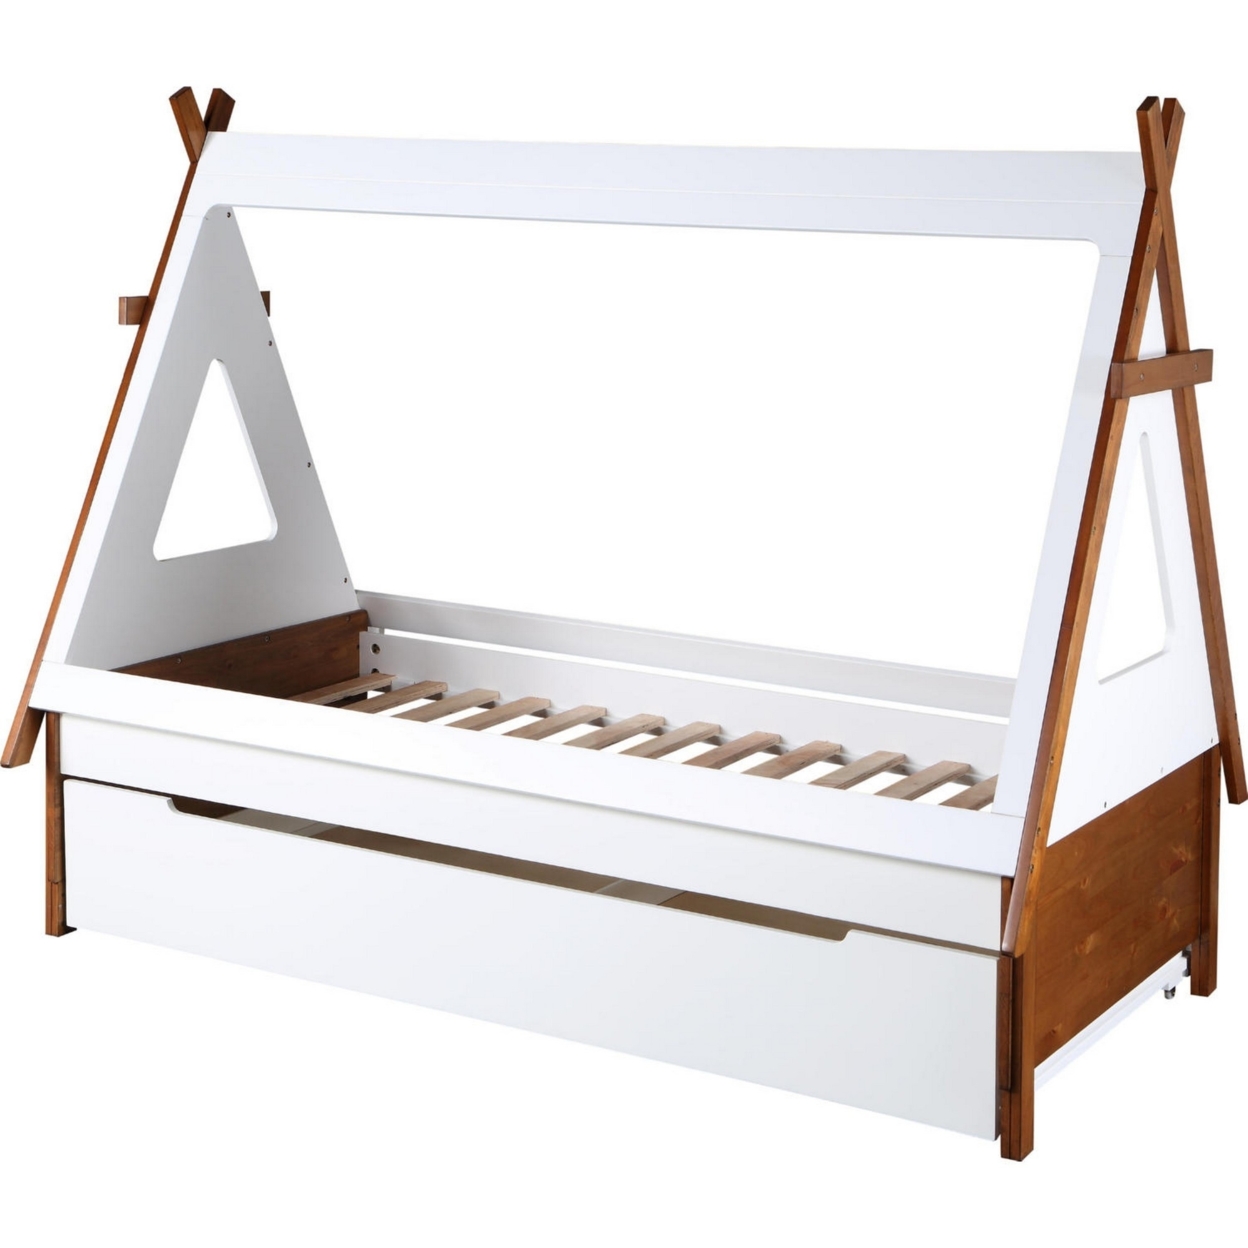 Modern Wood Twin Bed, House Shaped Bed Frame, Slat System, Brown, White- Saltoro Sherpi